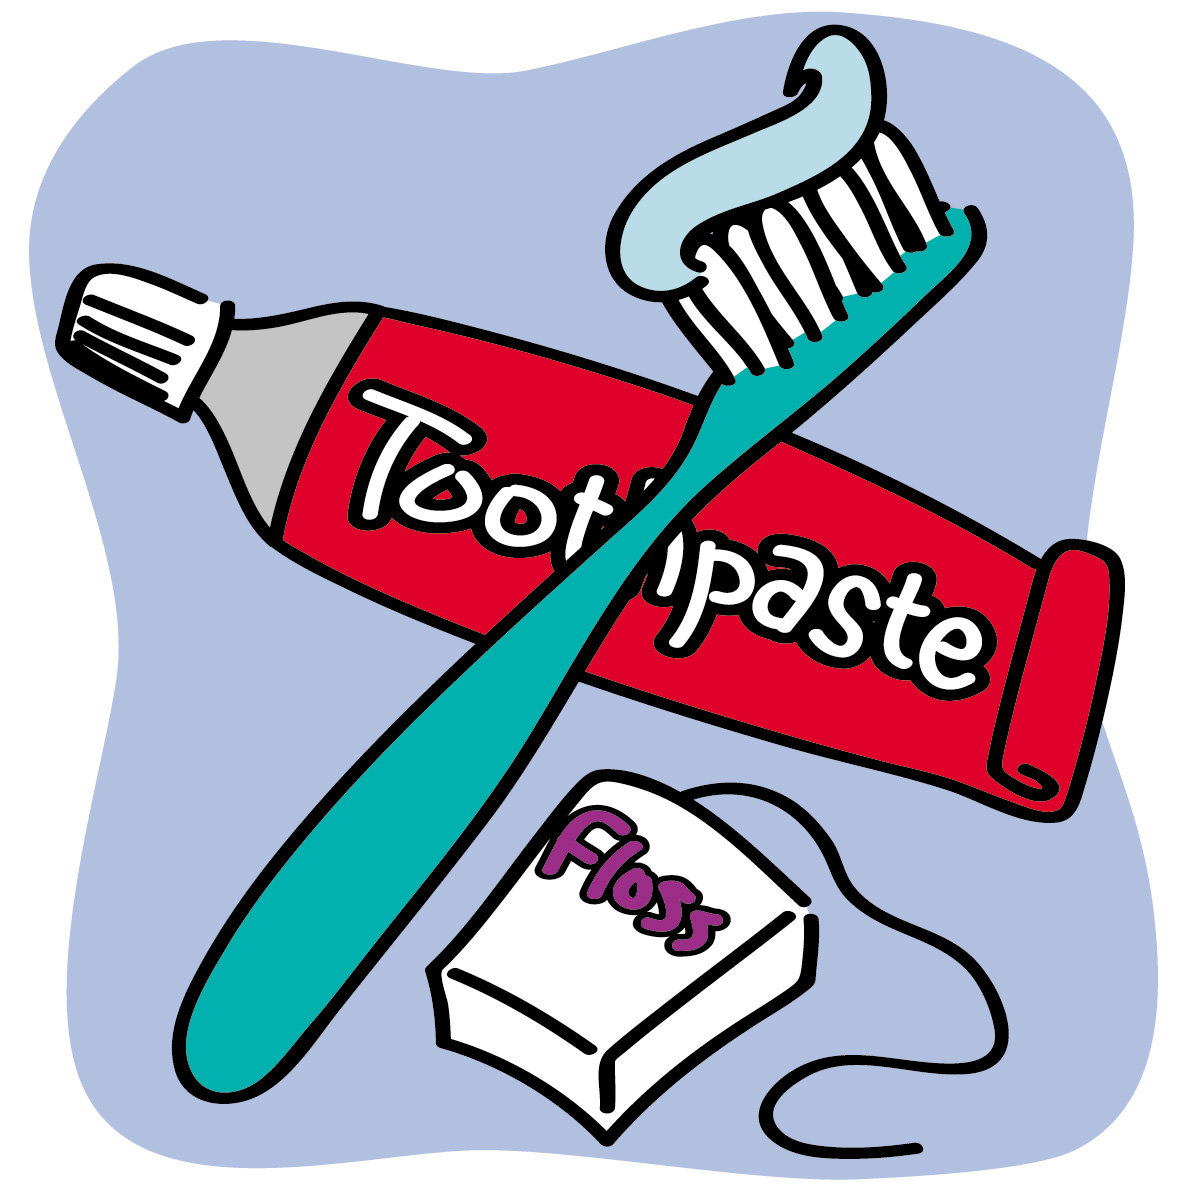 Dentist Clip Art Images - Free Clipart Images